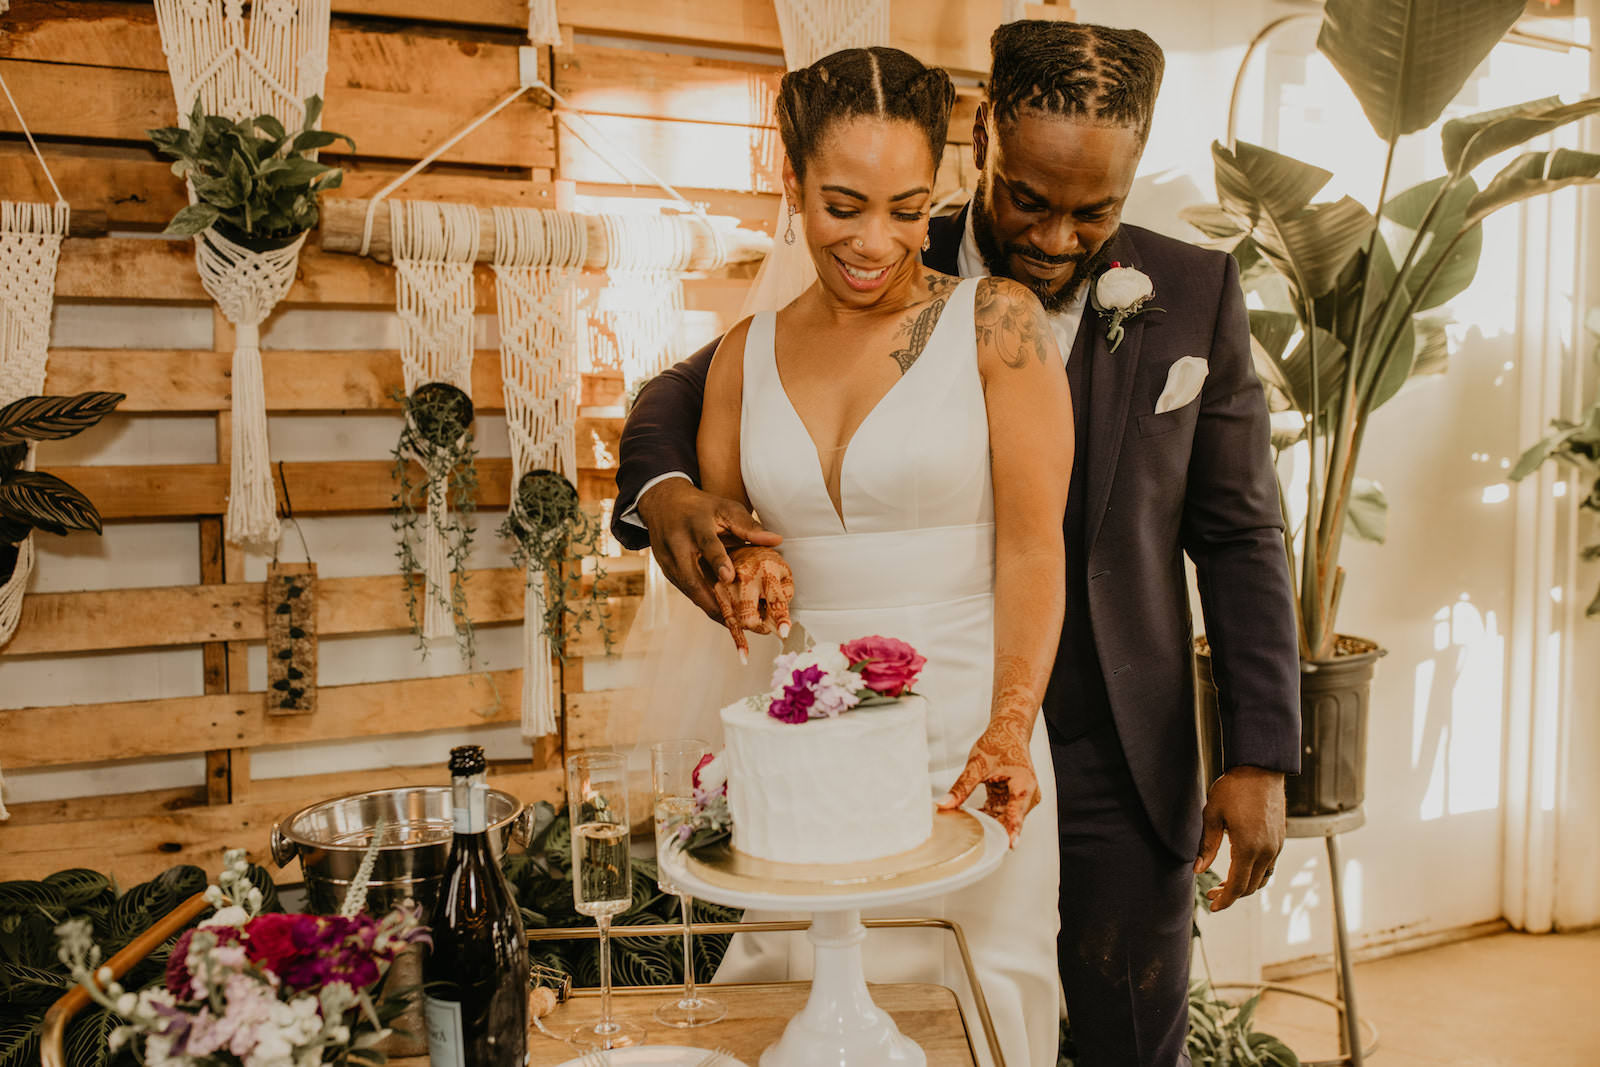 Intimate Elopement Wedding, Bride and Groom Cake Cutting | Tampa Bay Wedding Planner Elope Tampa Bay